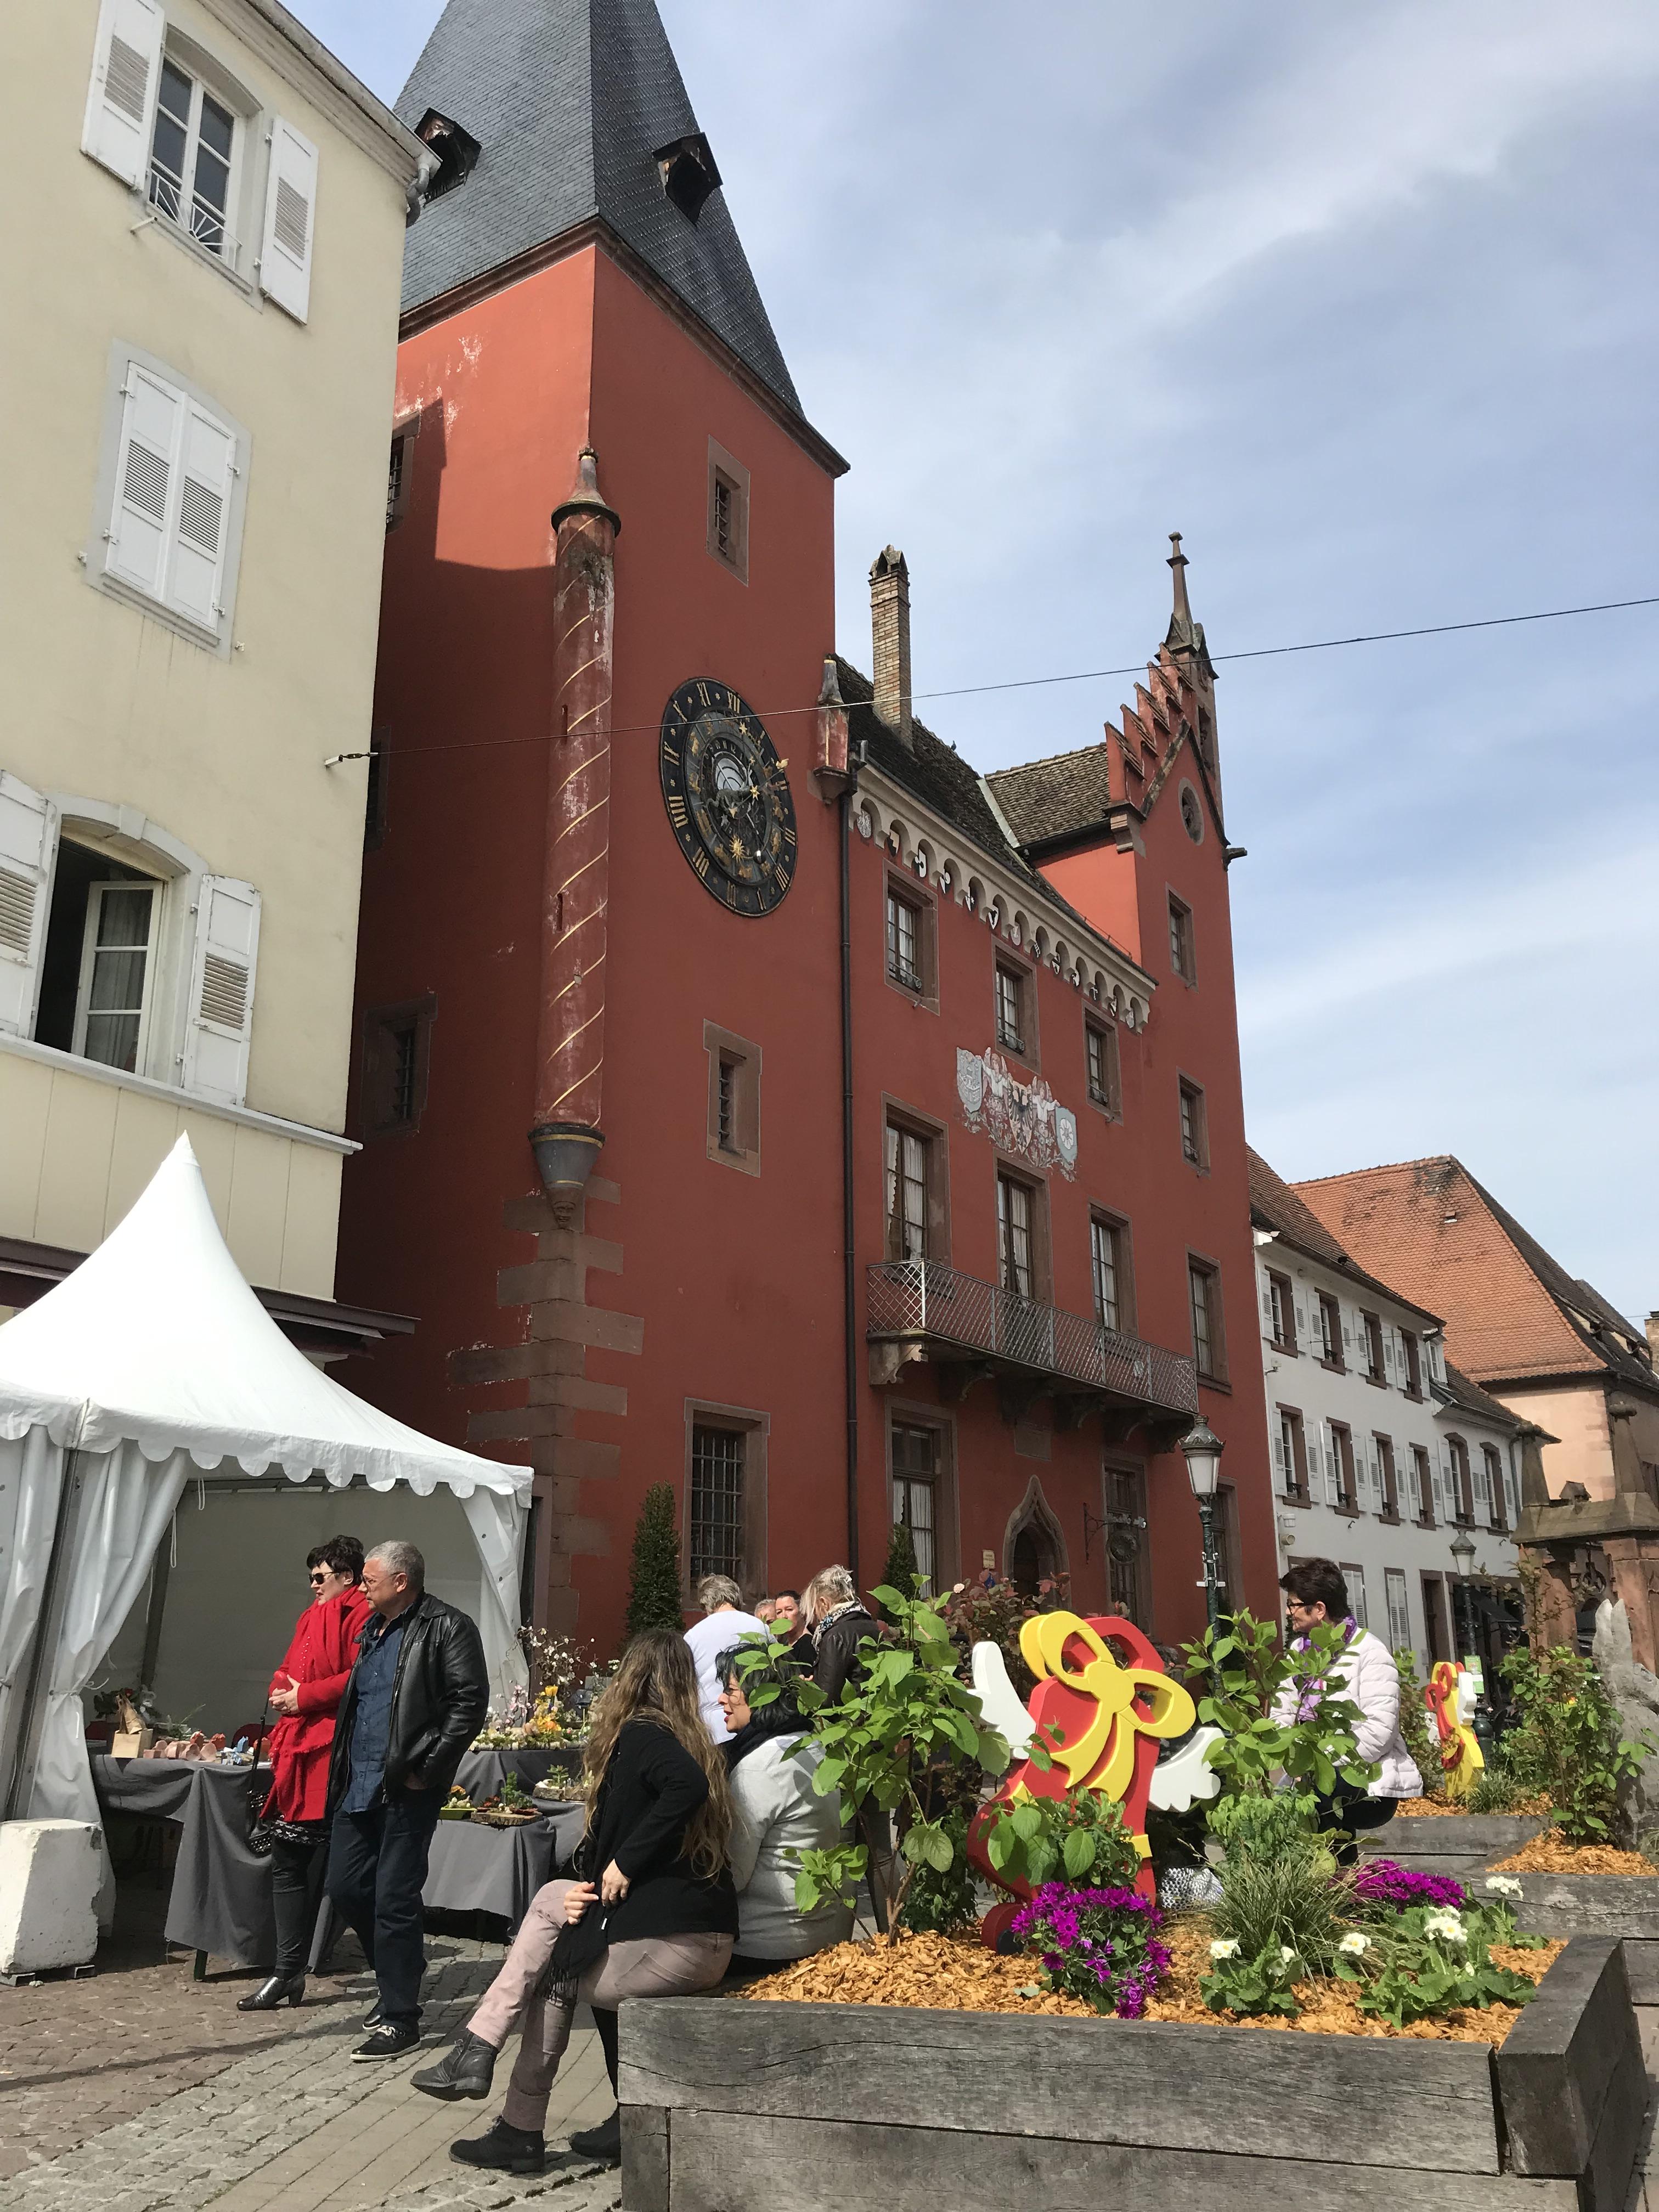 Spring market in Haguenau